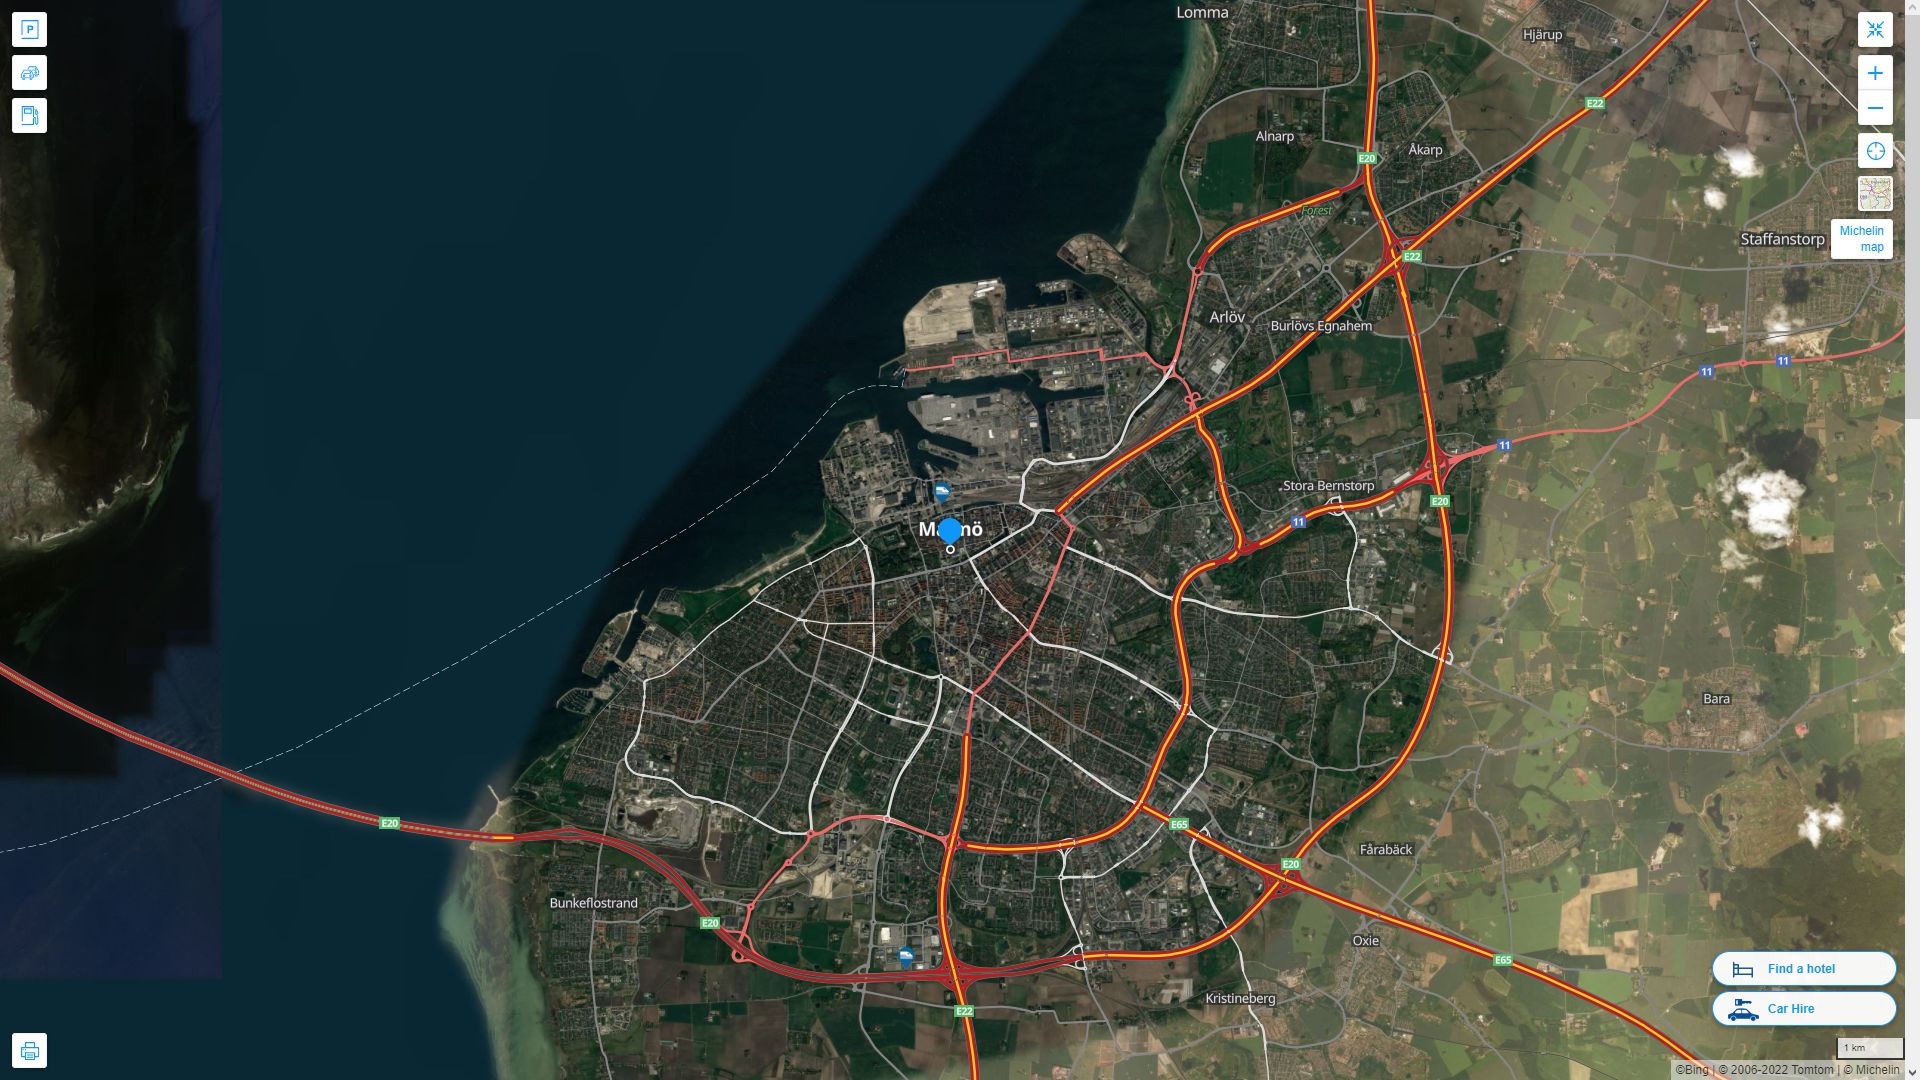 Malmo Suede Autoroute et carte routiere avec vue satellite